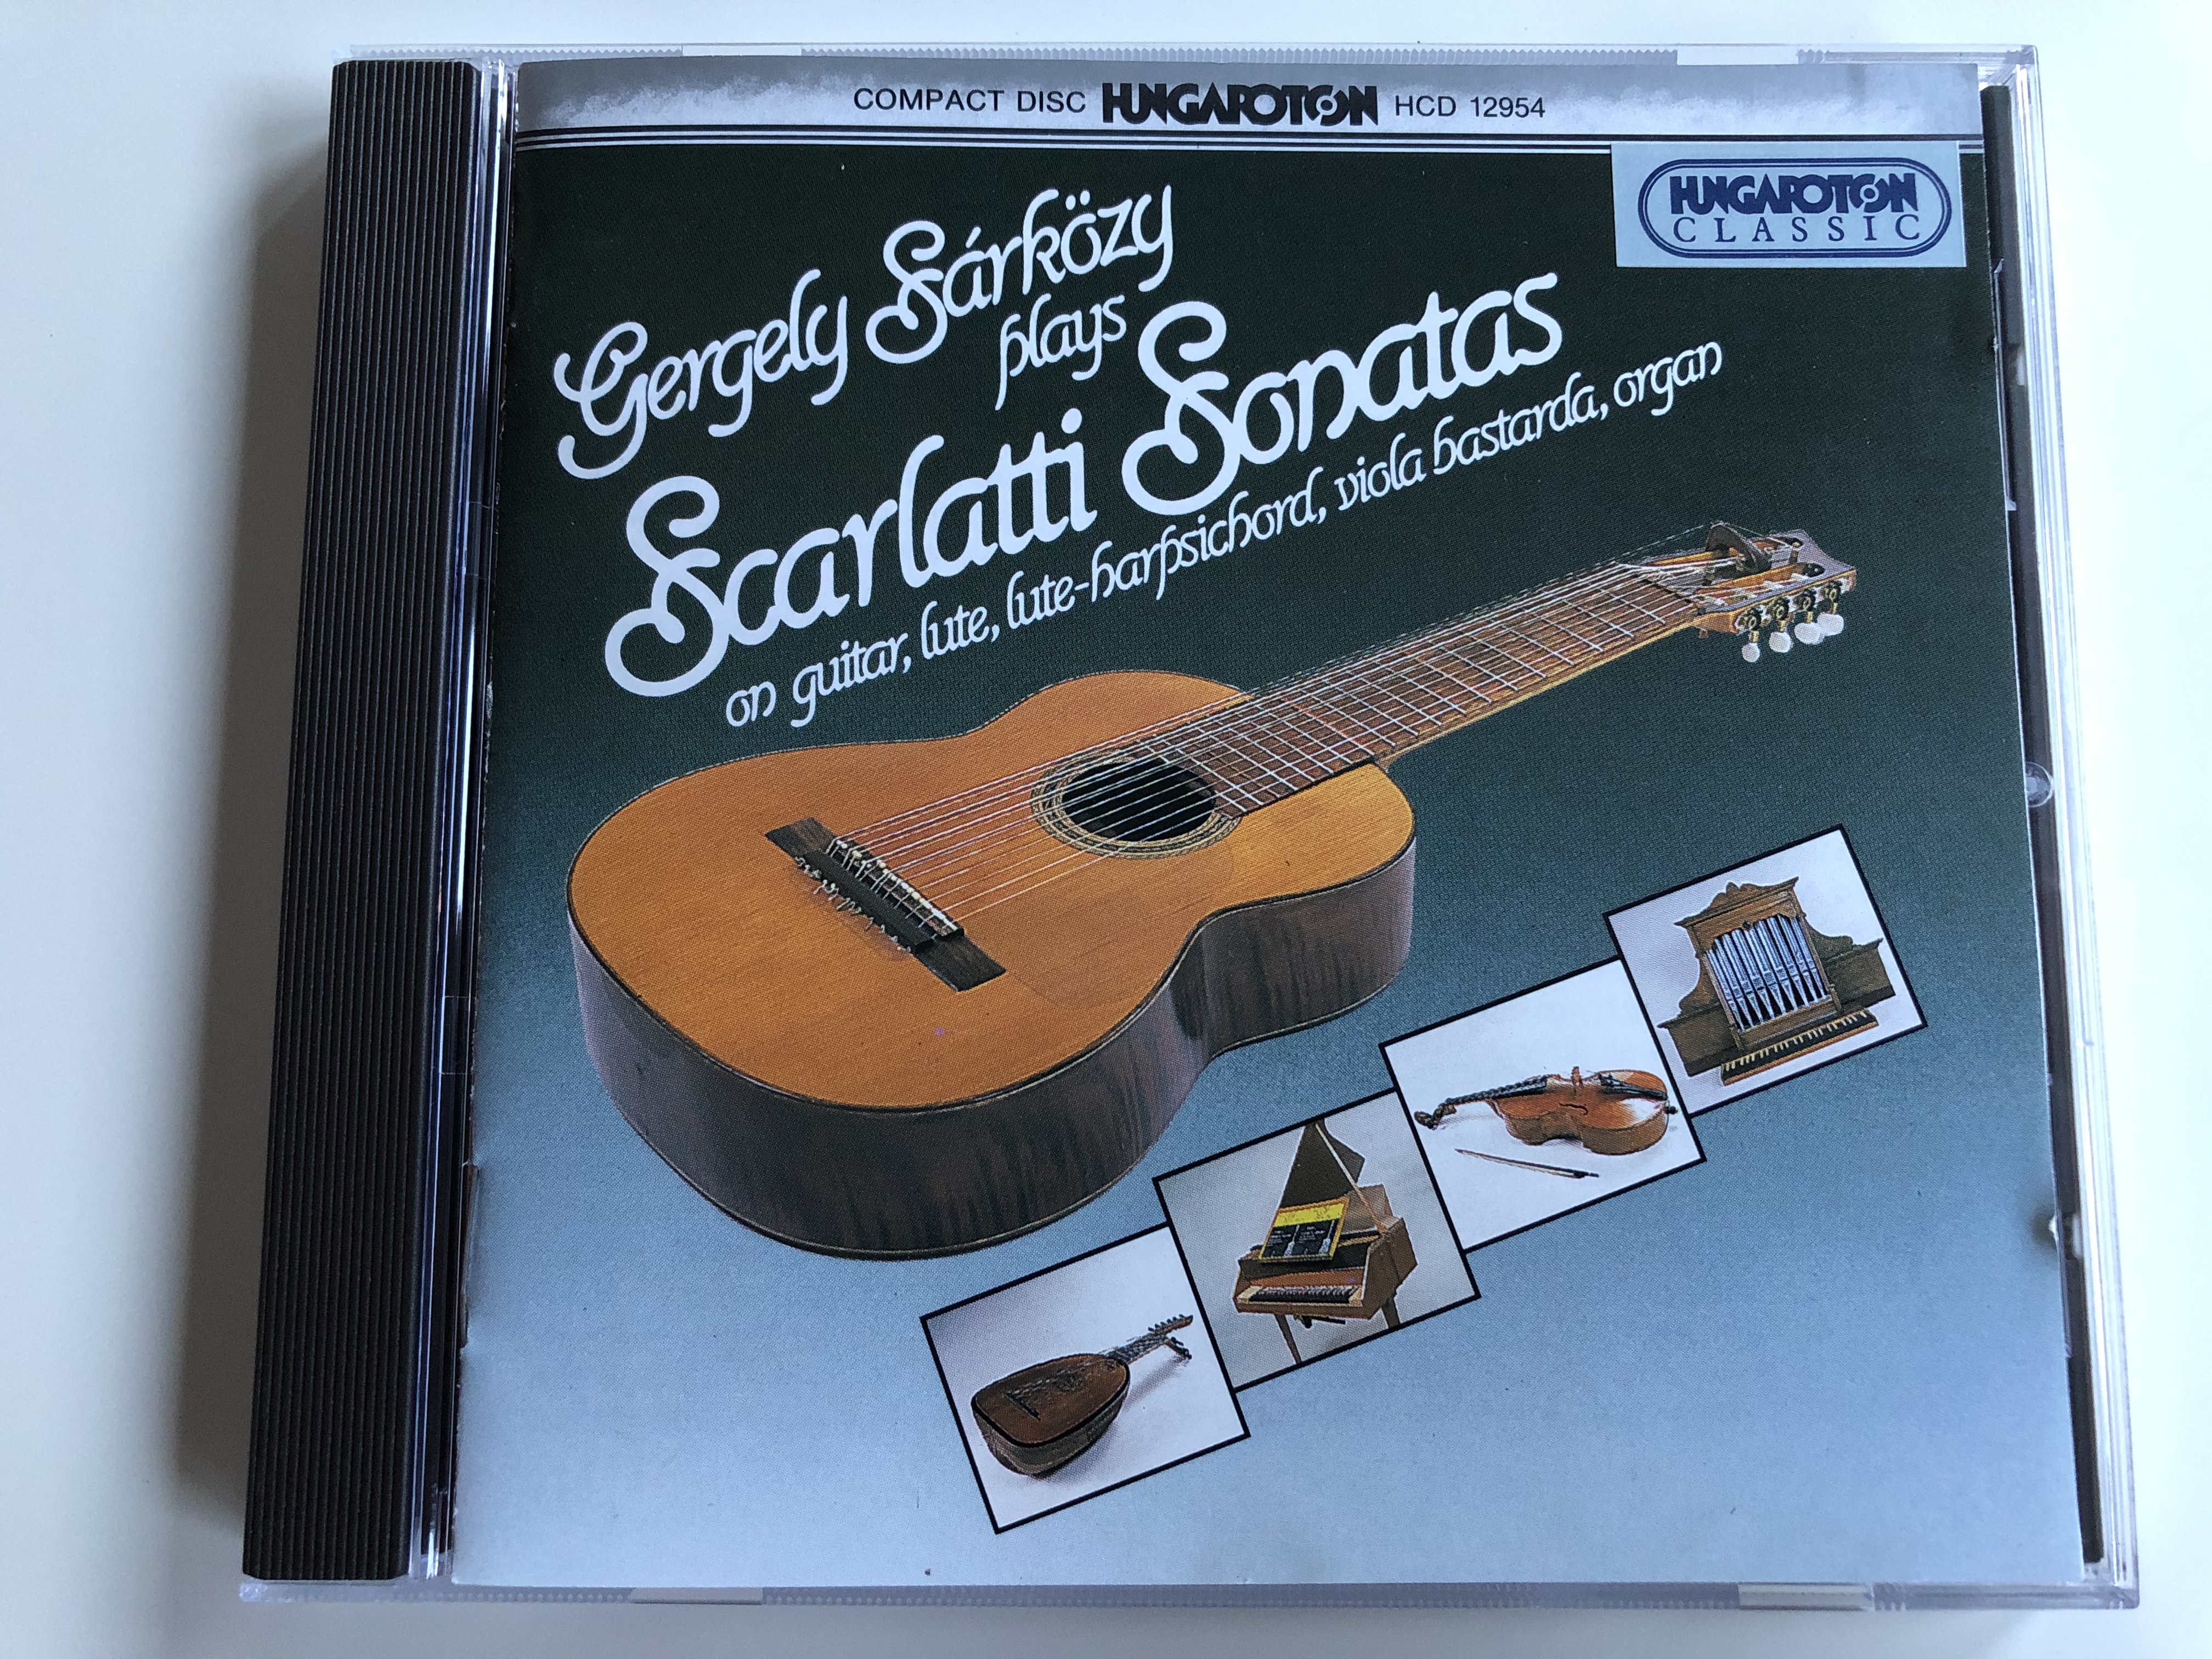 gergely-s-rk-zy-plays-scarlatti-sonatas-on-guitar-lute-lute-harpsichord-viola-bastarda-organ-hungaroton-classic-audio-cd-1995-stereo-hcd-12954-1-.jpg